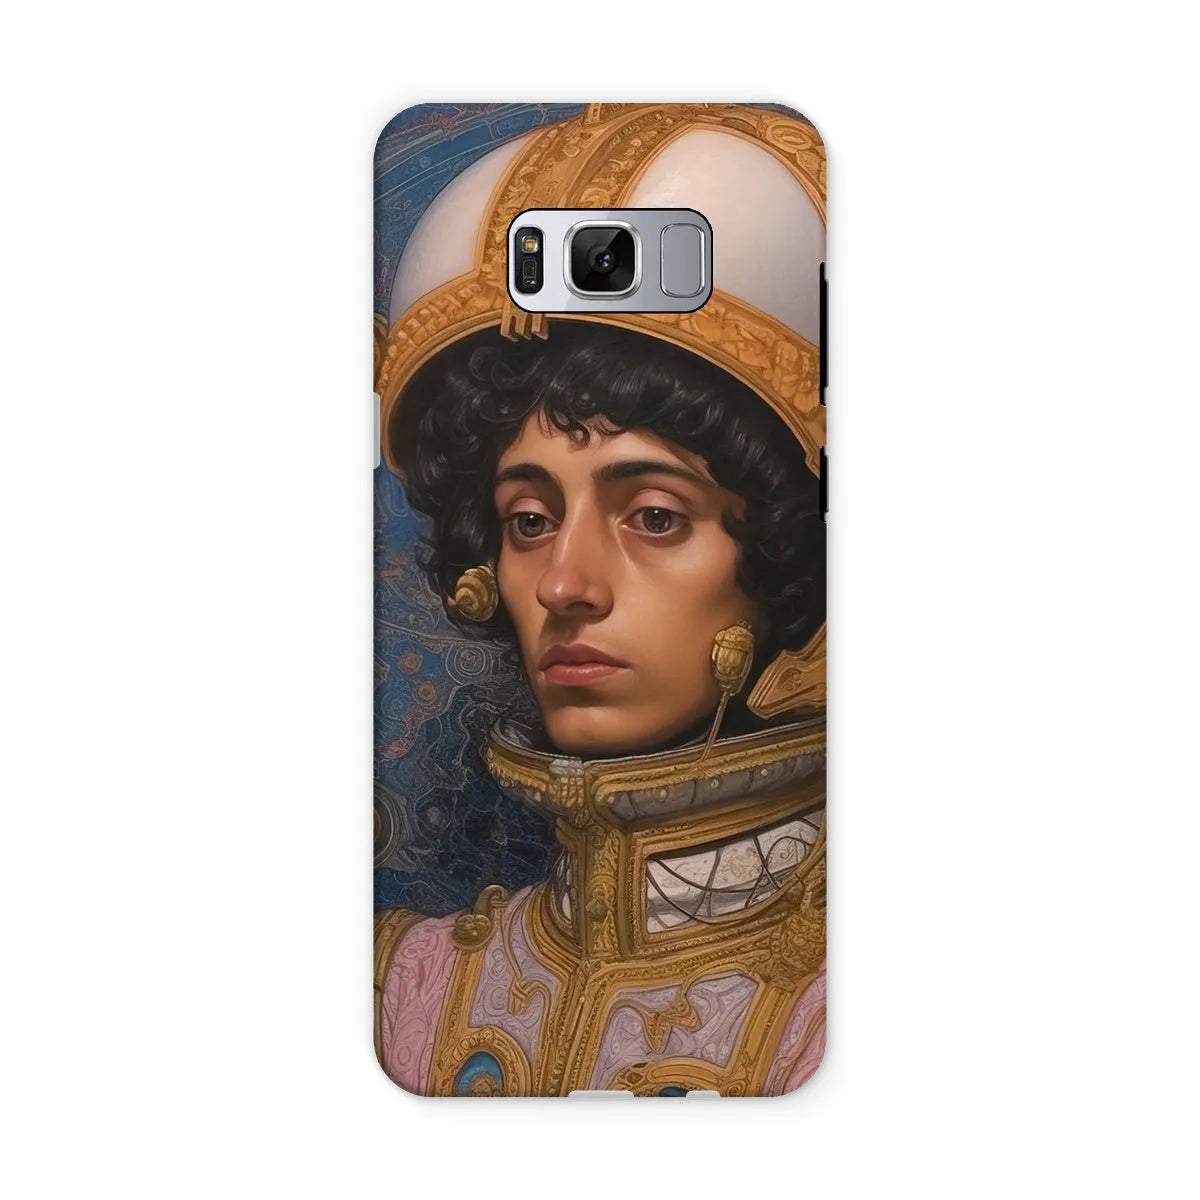 Samir The Gay Astronaut - Lgbtq Art Phone Case - Samsung Galaxy S8 / Matte - Mobile Phone Cases - Aesthetic Art